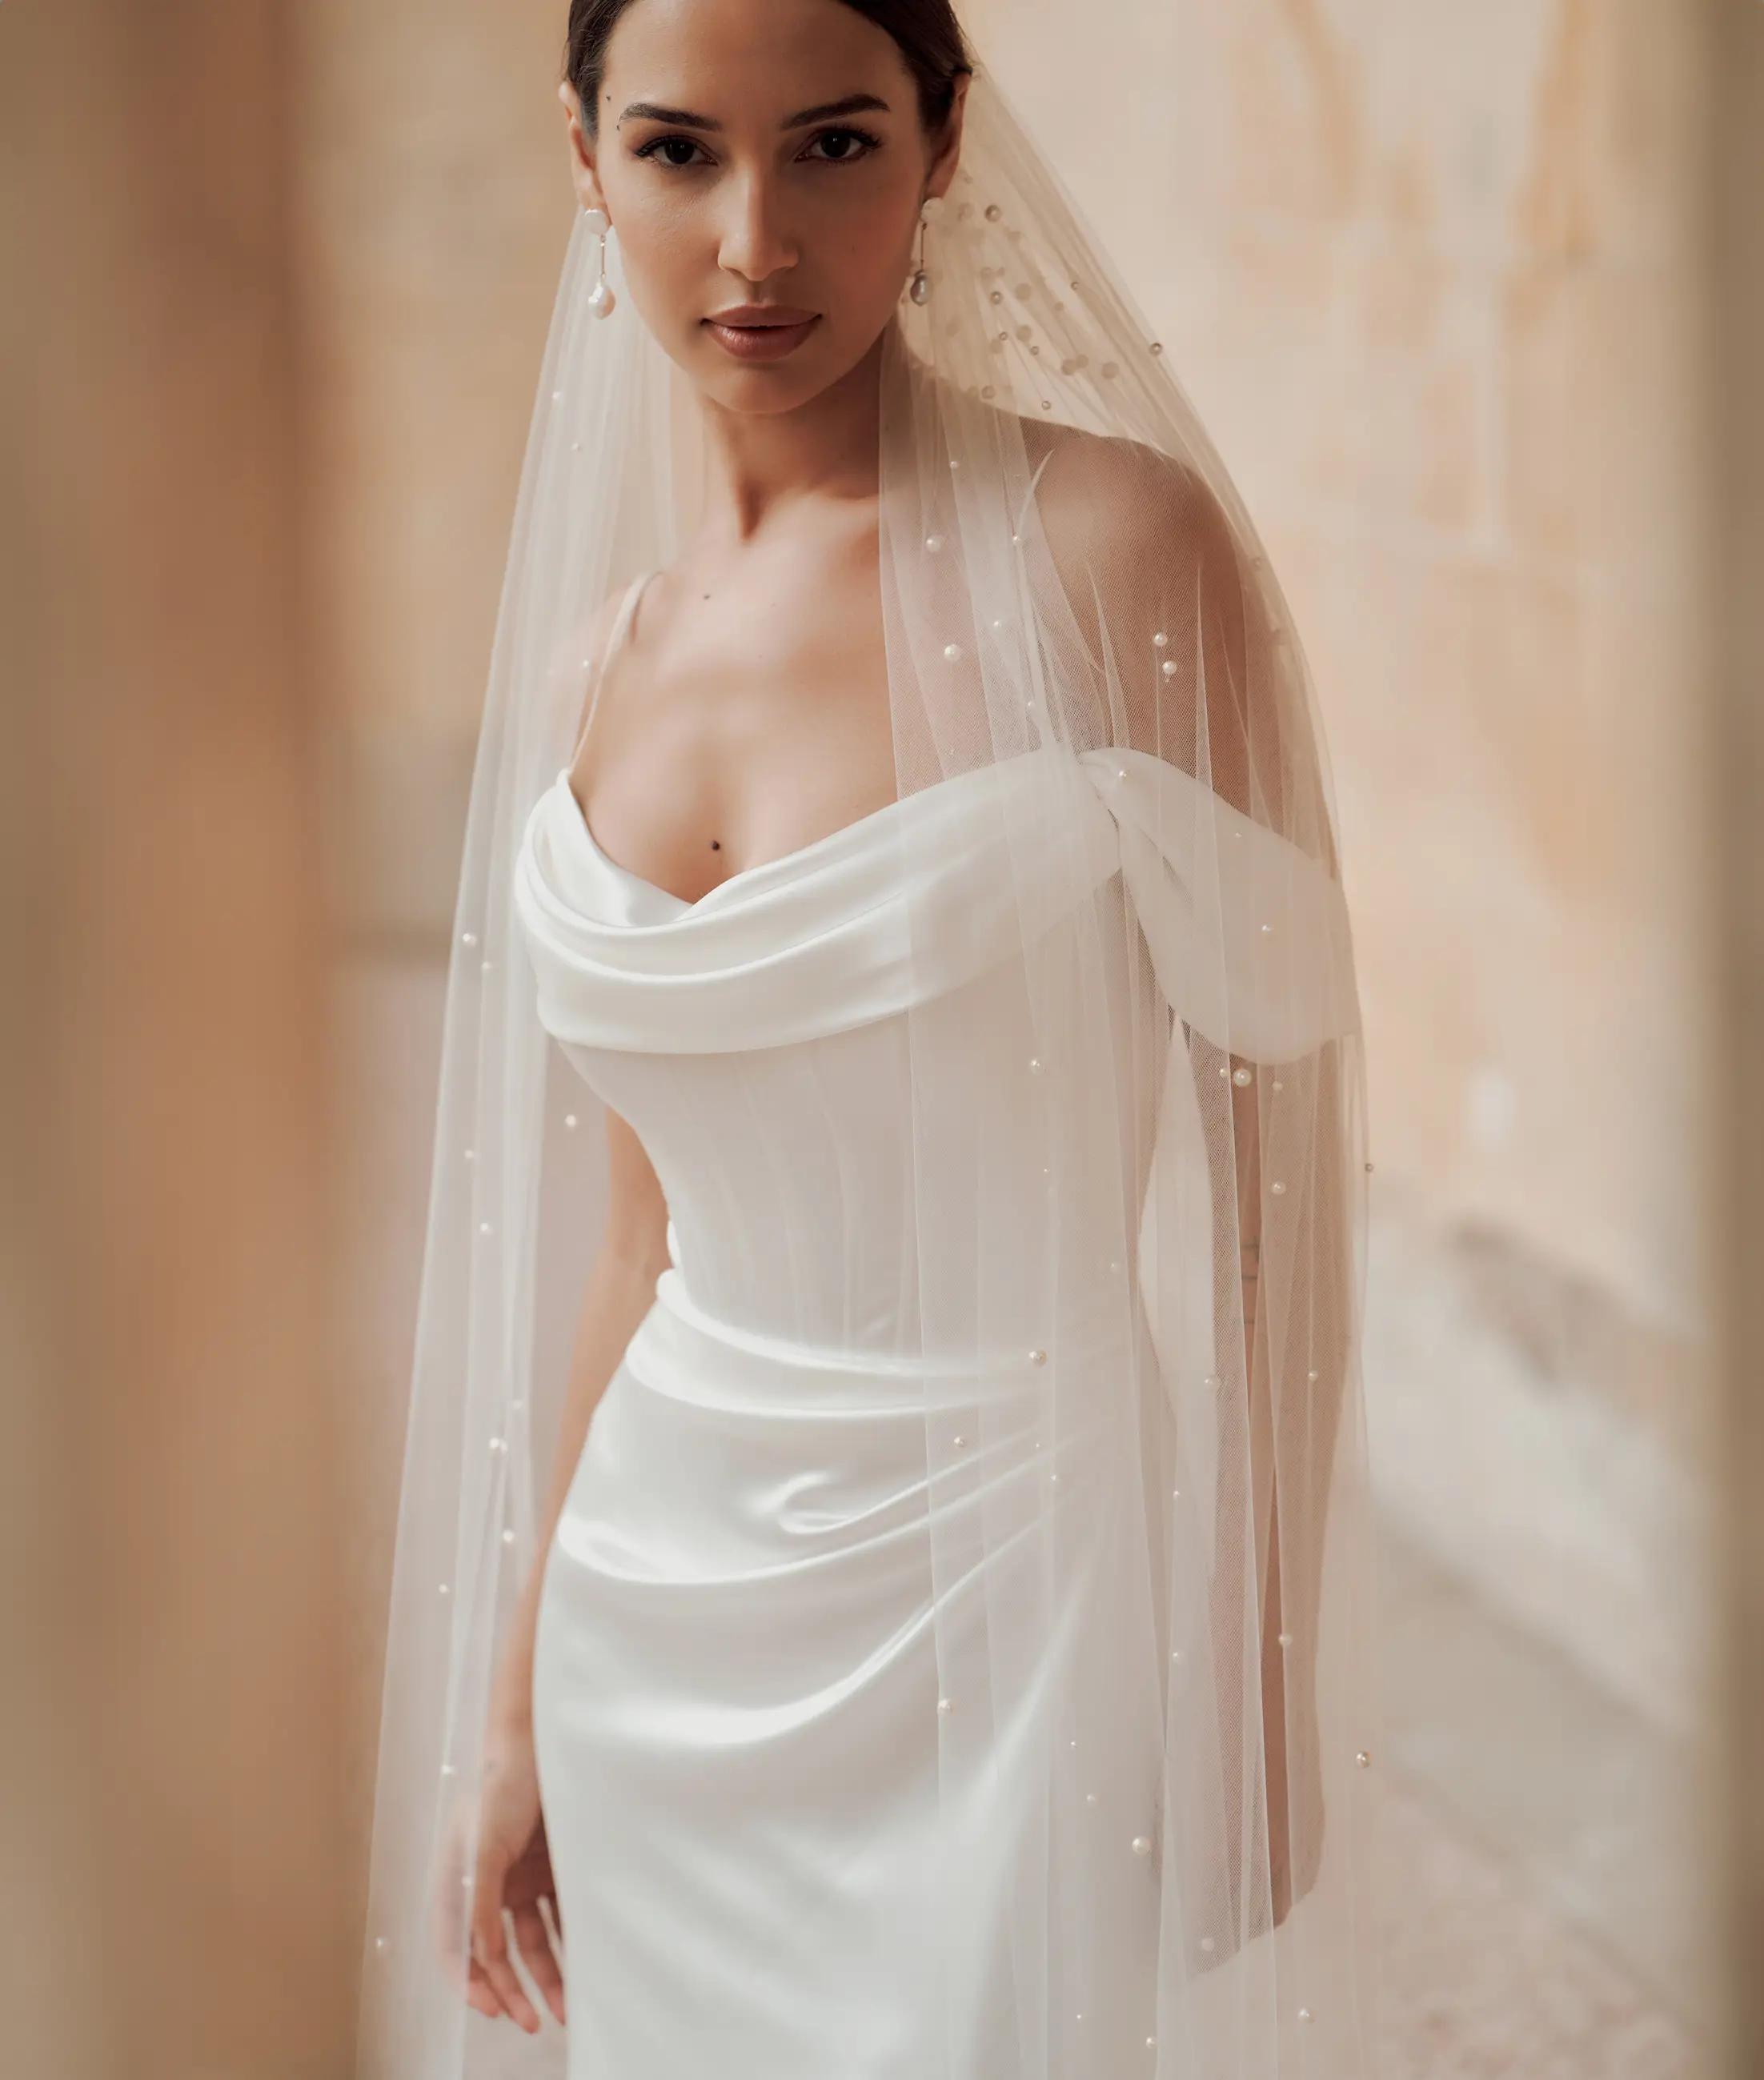 Morgan Davies Bridal Model wearing Stephanie Allin Bridal dress